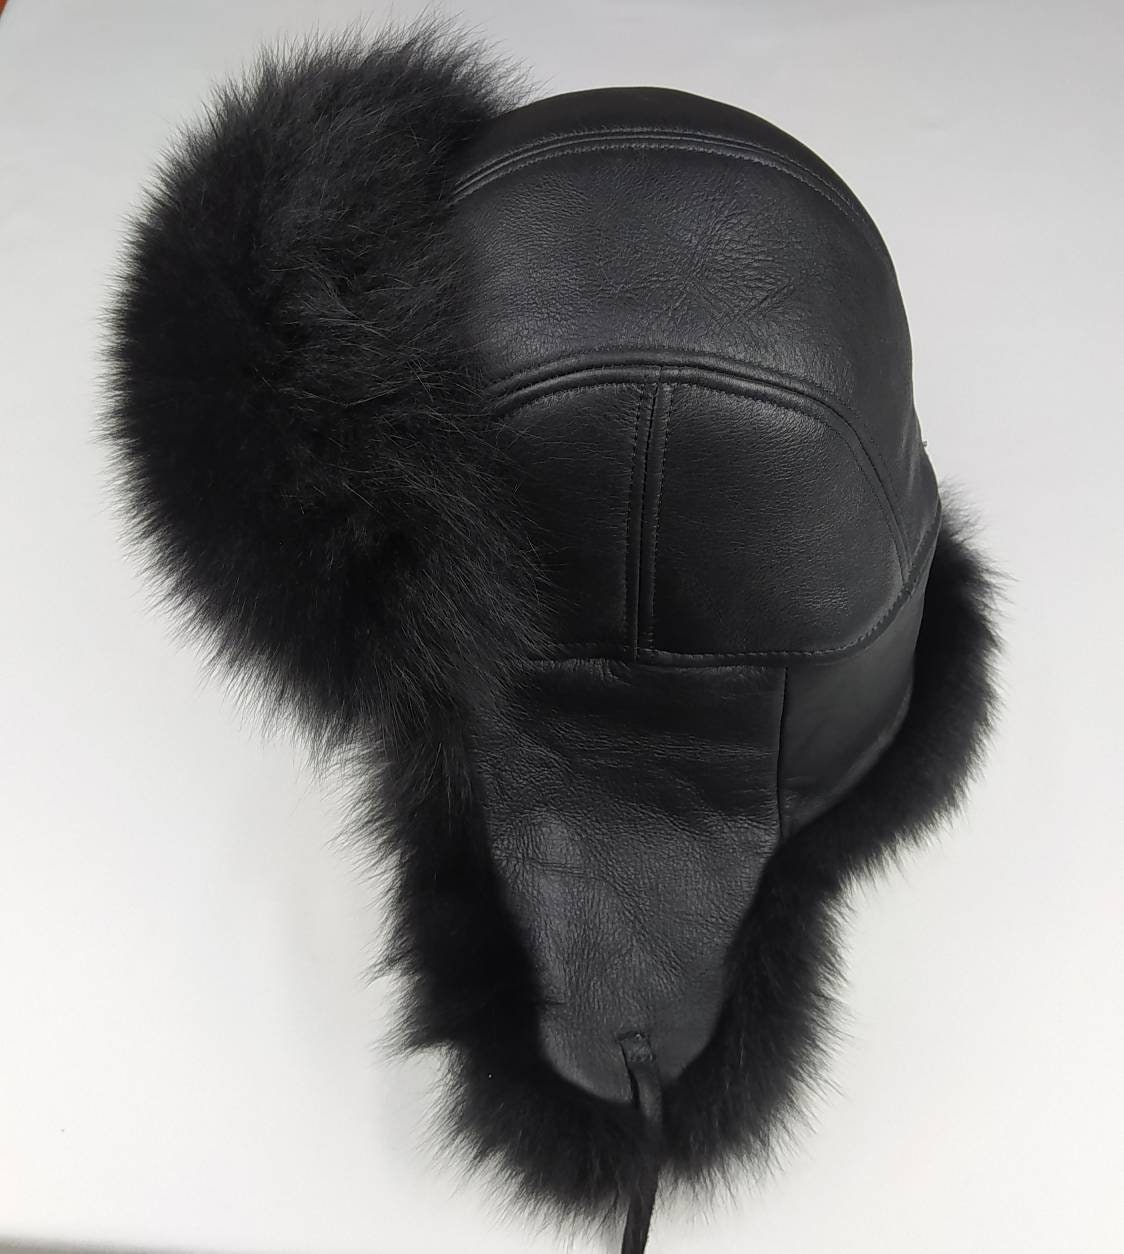 FNFUR Womens Black Fox Fur Trapper Hat with Pom Poms Cossack hat,Ushanka  hat,Avaitor hat,Pilot hat,Bomber hat